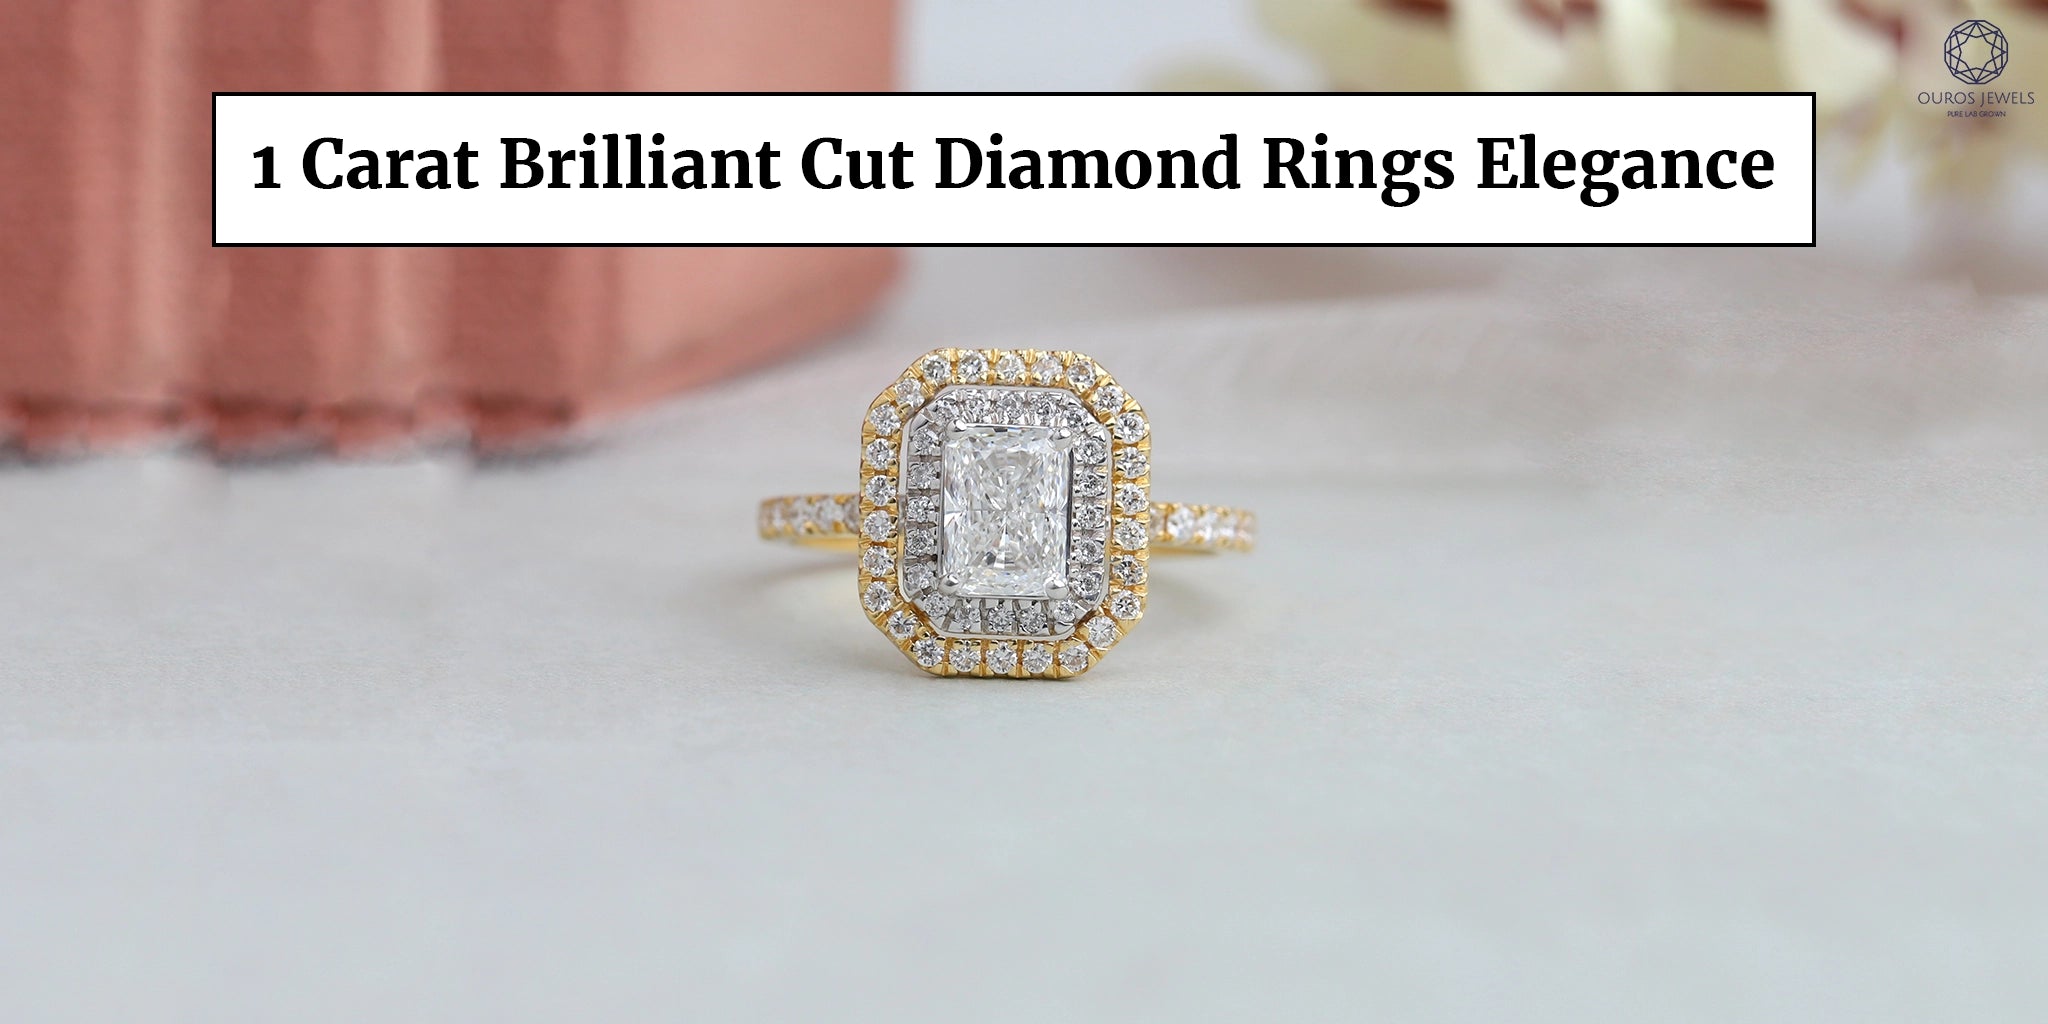 Buy Seven-Hills Real & Natural 1 Carat Diamond Ring Original Certified VVS1  D Colour Yellow Gold Diamond Ring Engagement Diamond Ring for Women Heere  ki Anguthi Hire Sone ki Anguthi हीरे की